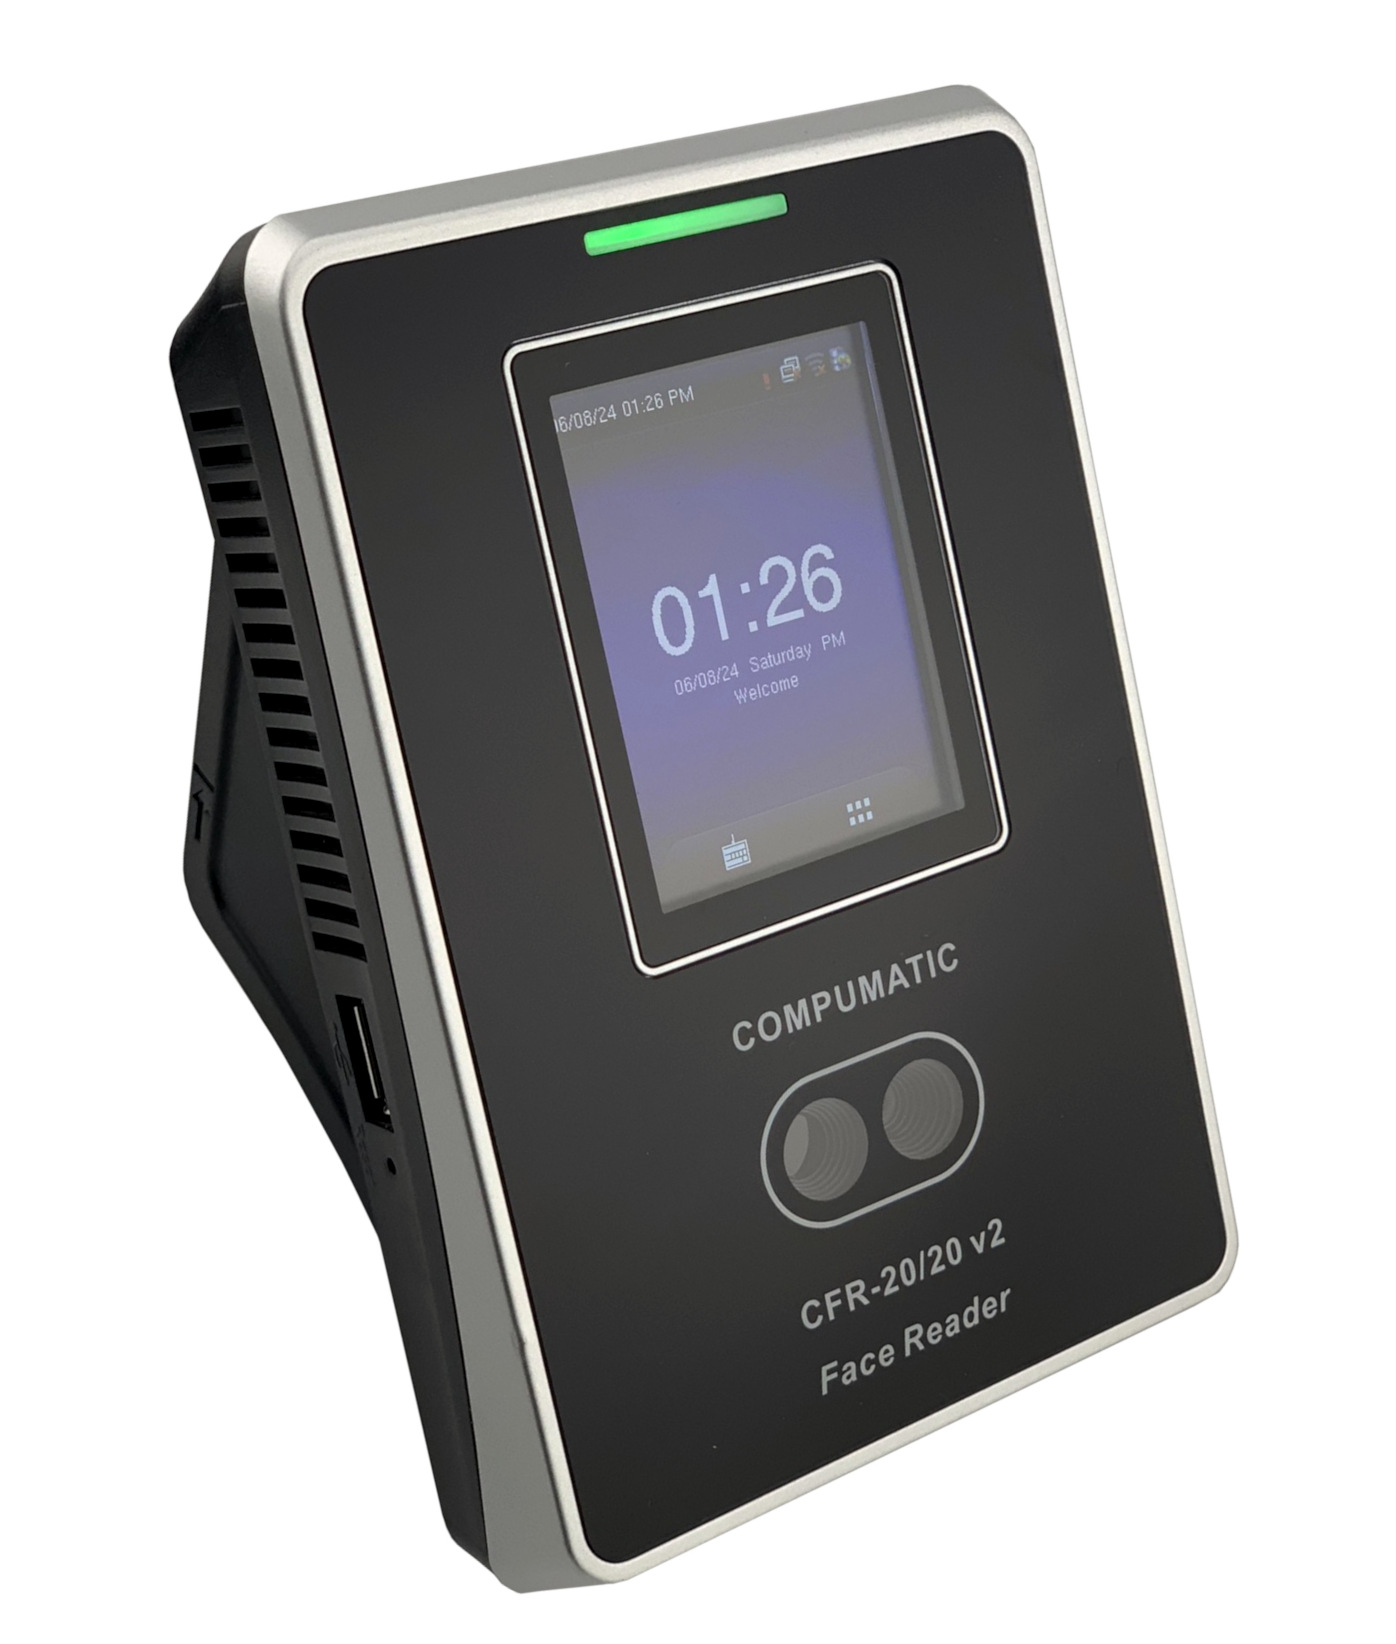 Compumatic CFR-20/20 v2 Face Reader Biometric Facial Recognition Time Clock